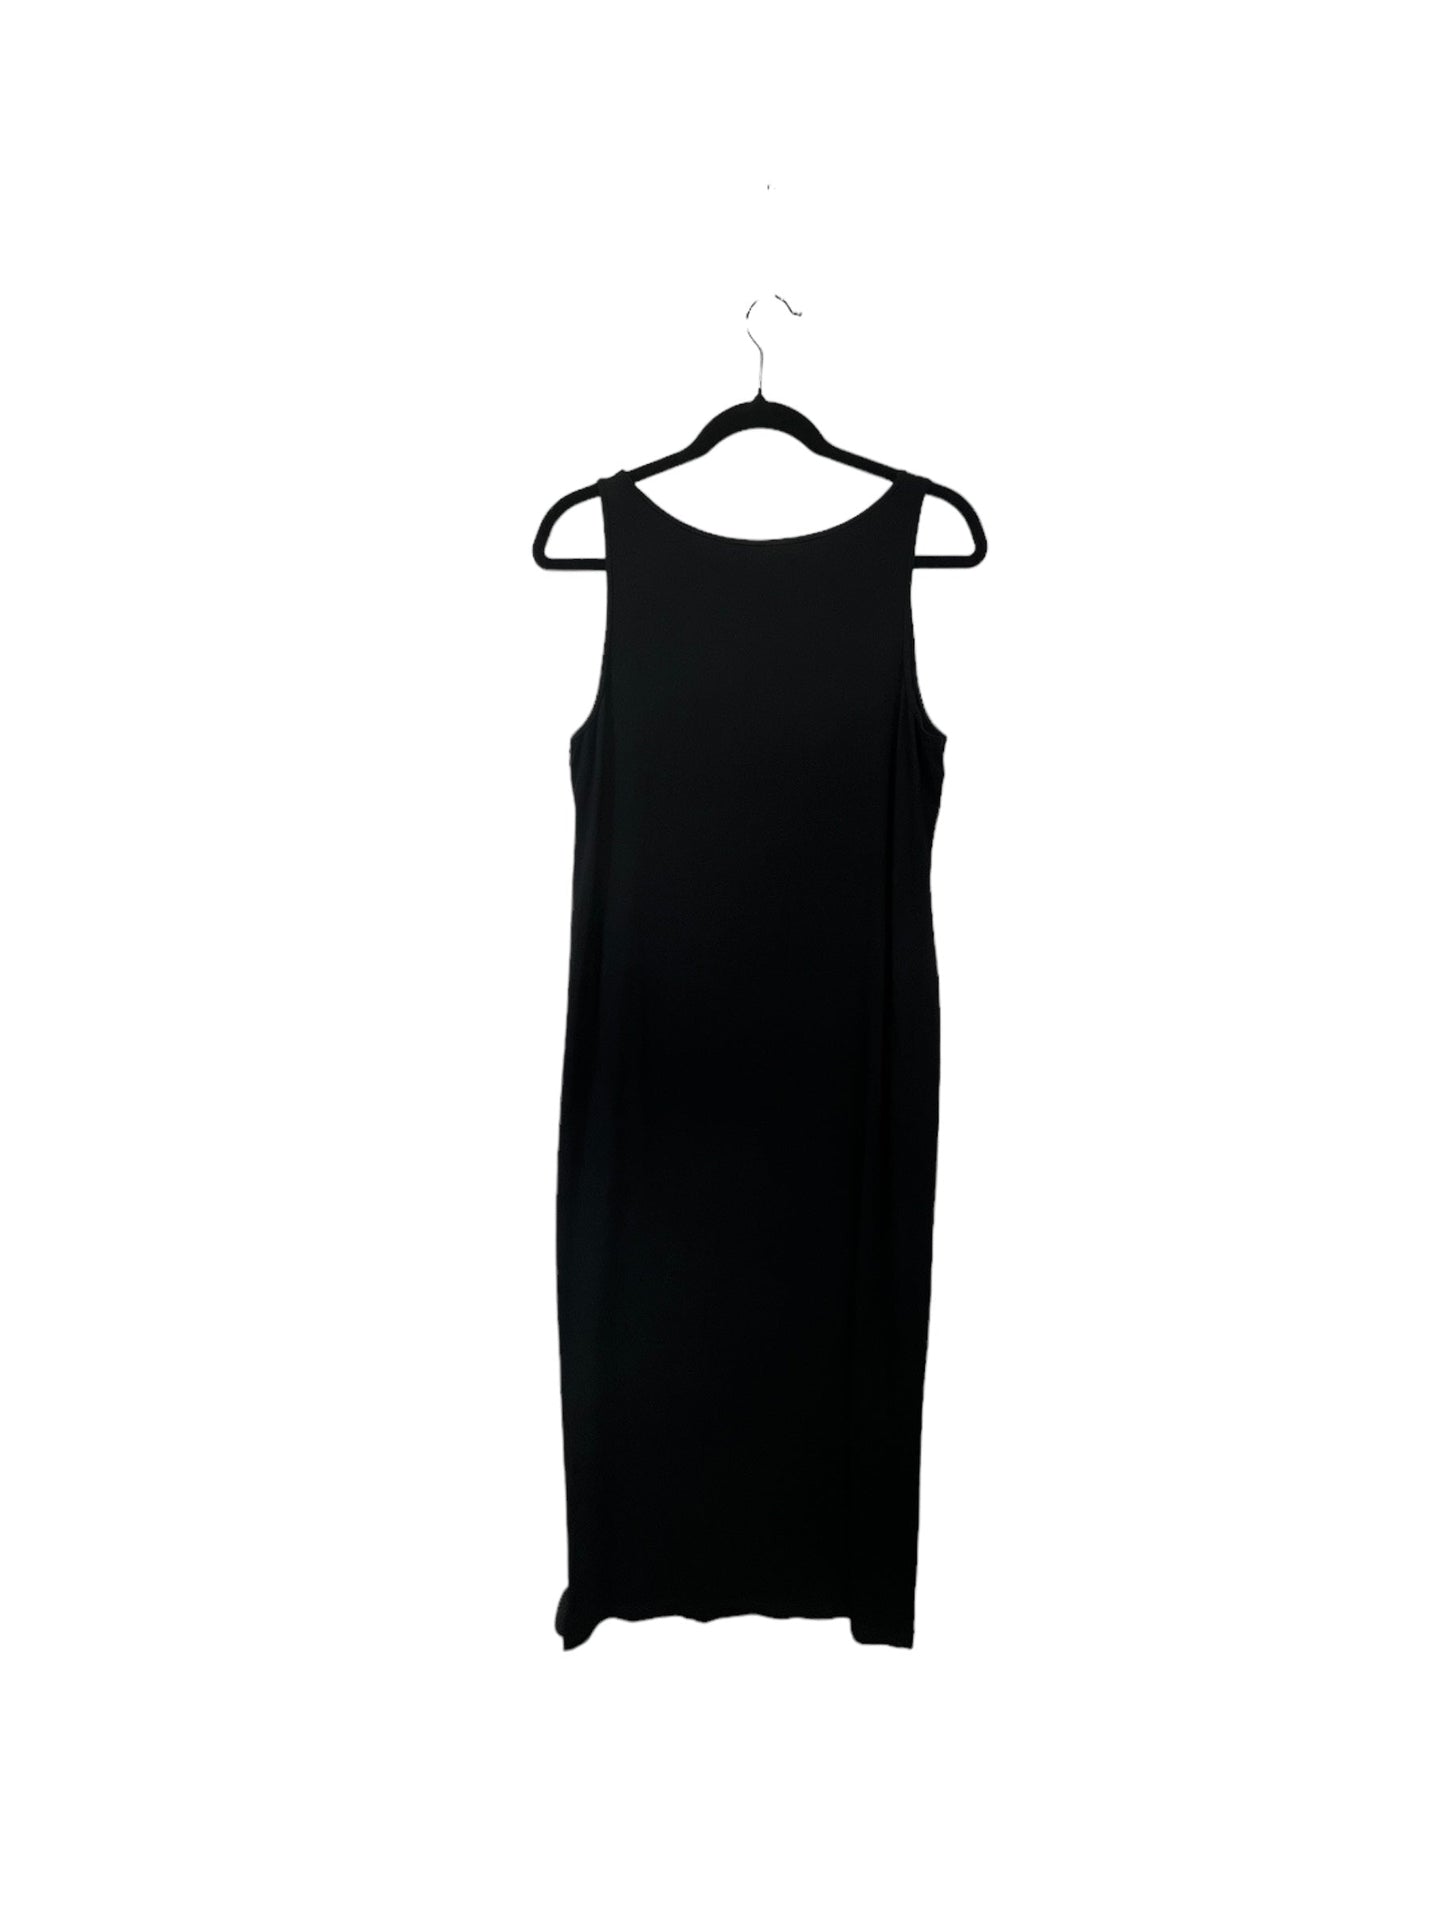 Black Dress Designer Eileen Fisher, Size Petite L